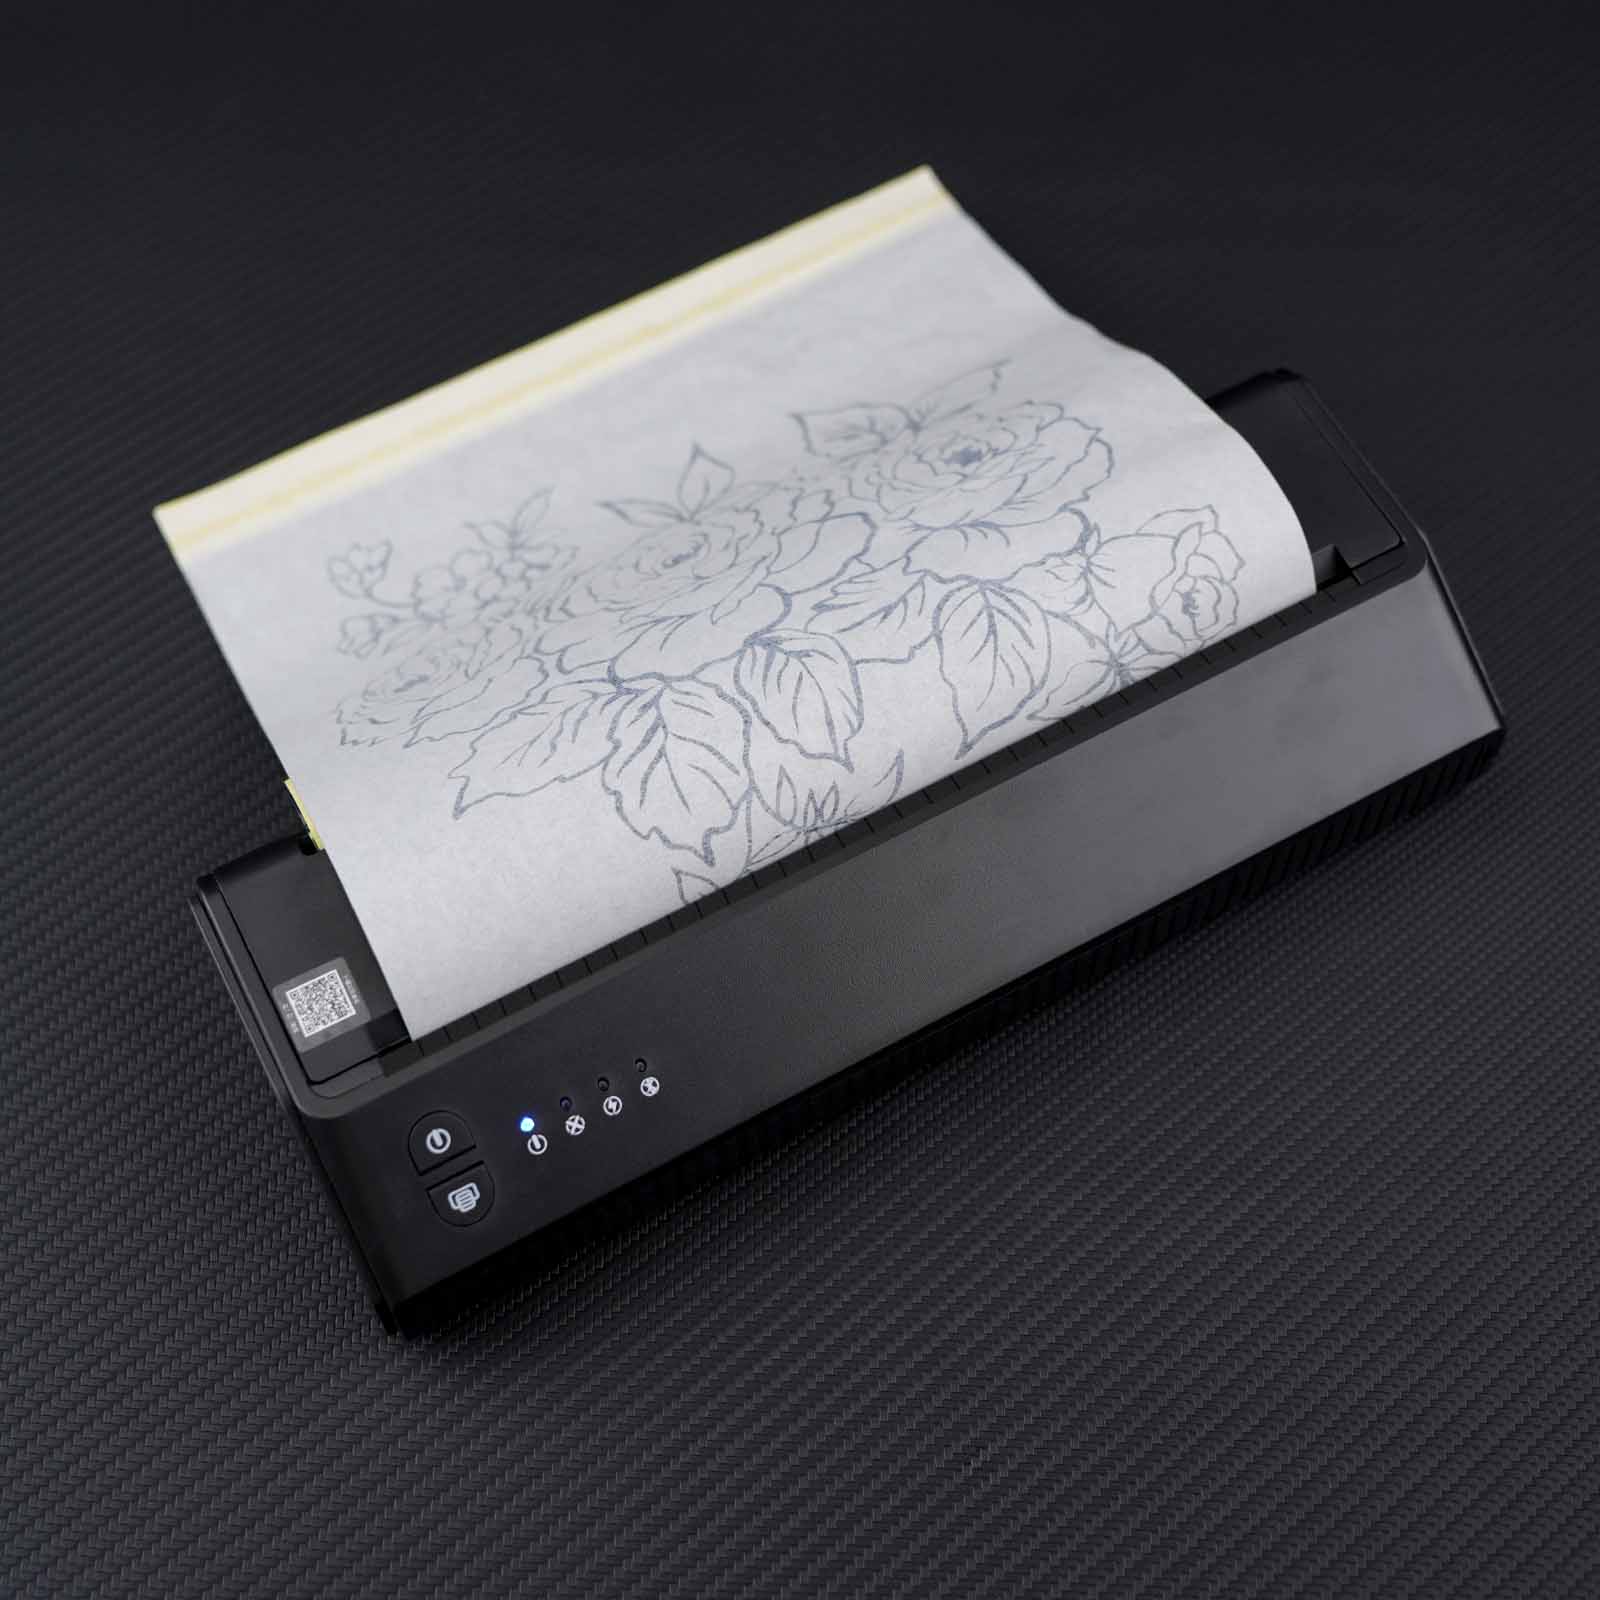 Tattoo Transfer Stencil Machine - High-Quality Thermal Printer